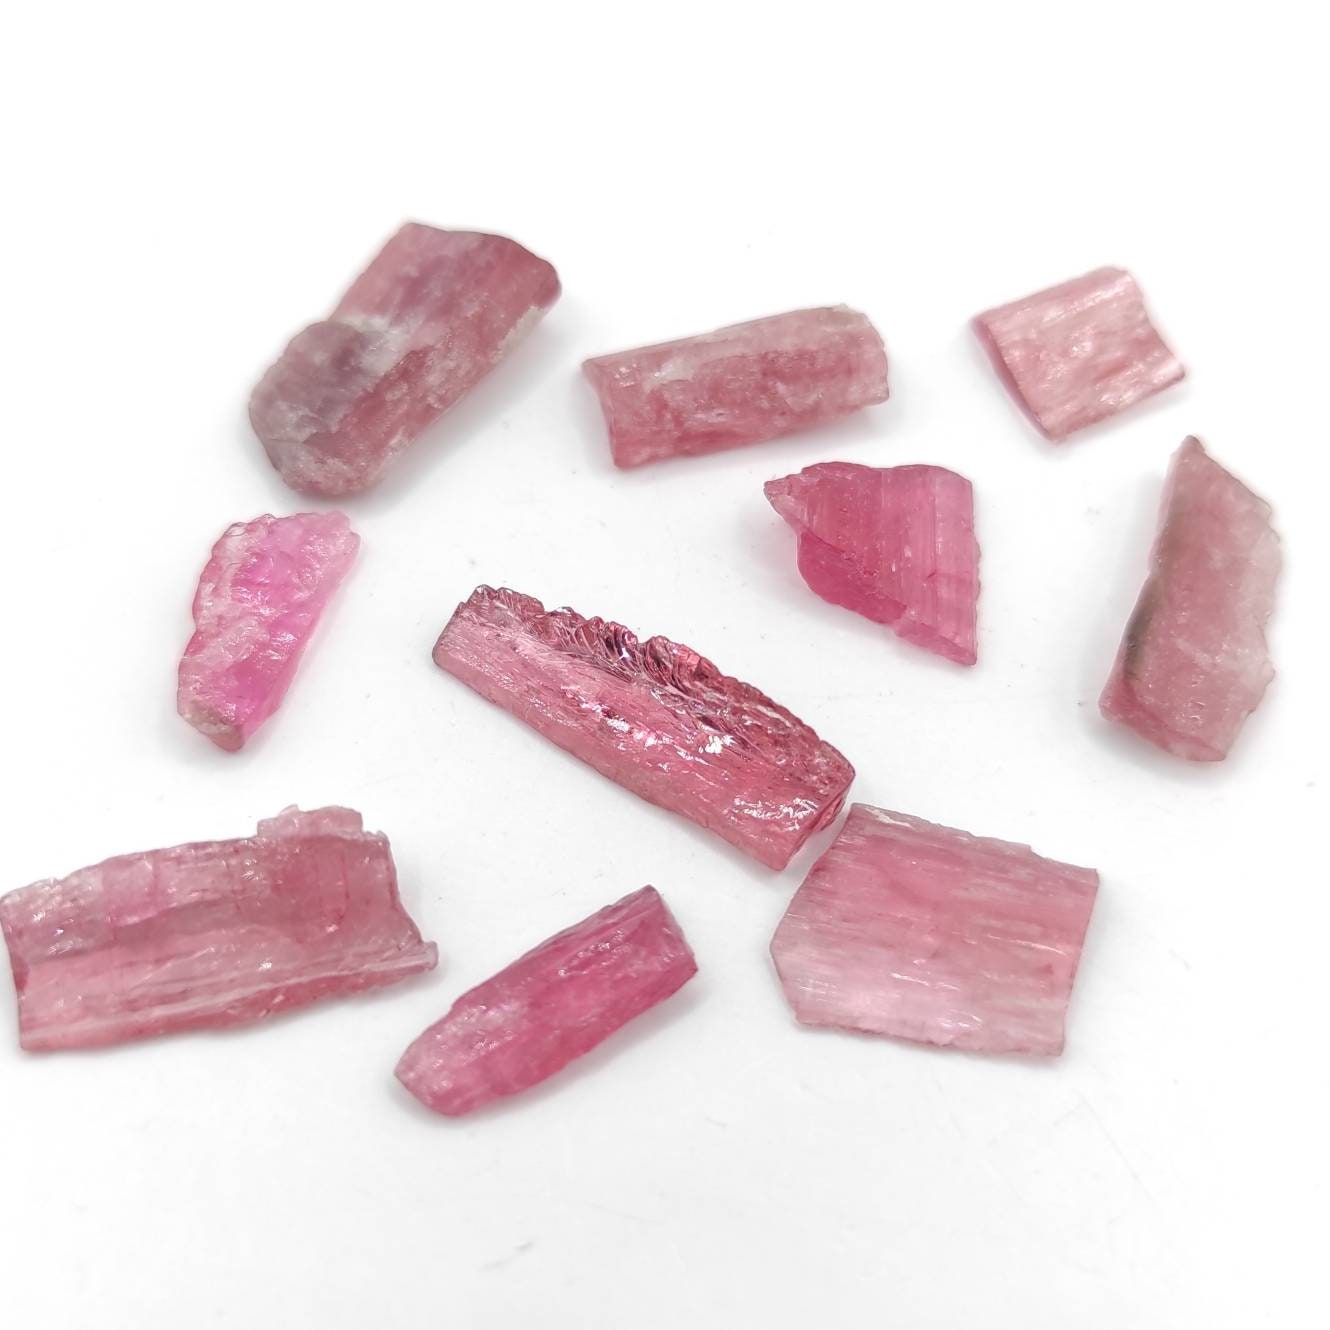 26ct Rubellite Tourmaline Lot - Pink Tourmaline Red Tourmaline Madagascar - Loose Tourmaline Raw Tourmaline Crystals Rough Gemstones Natural